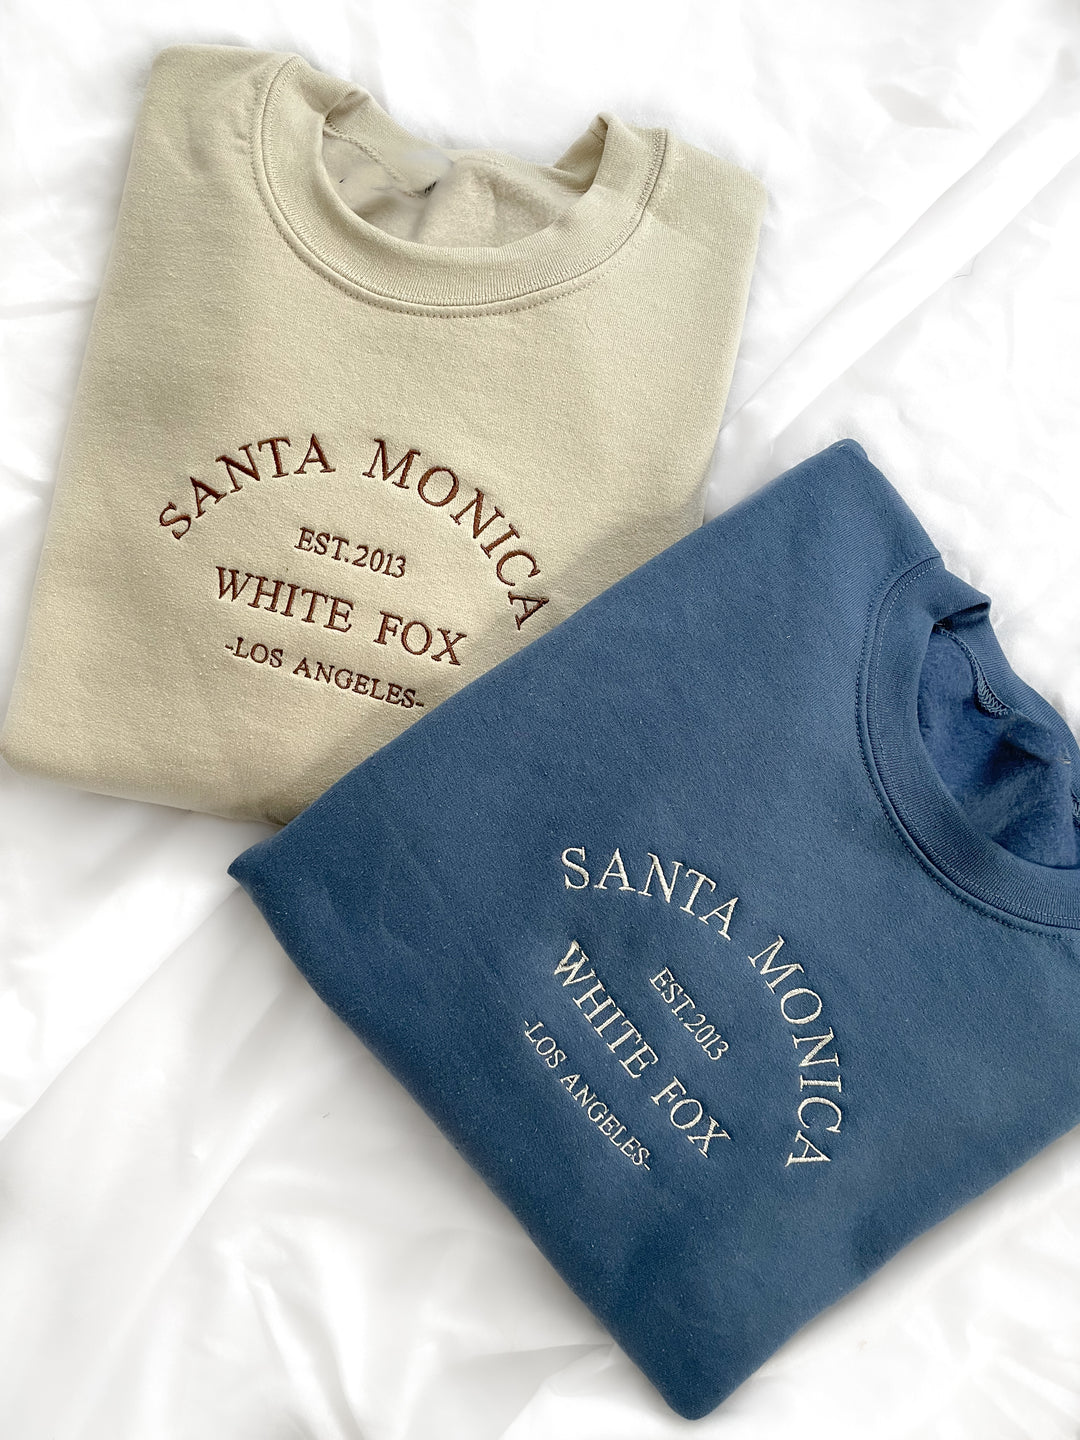 Santa Monica Crewneck Sweatshirt